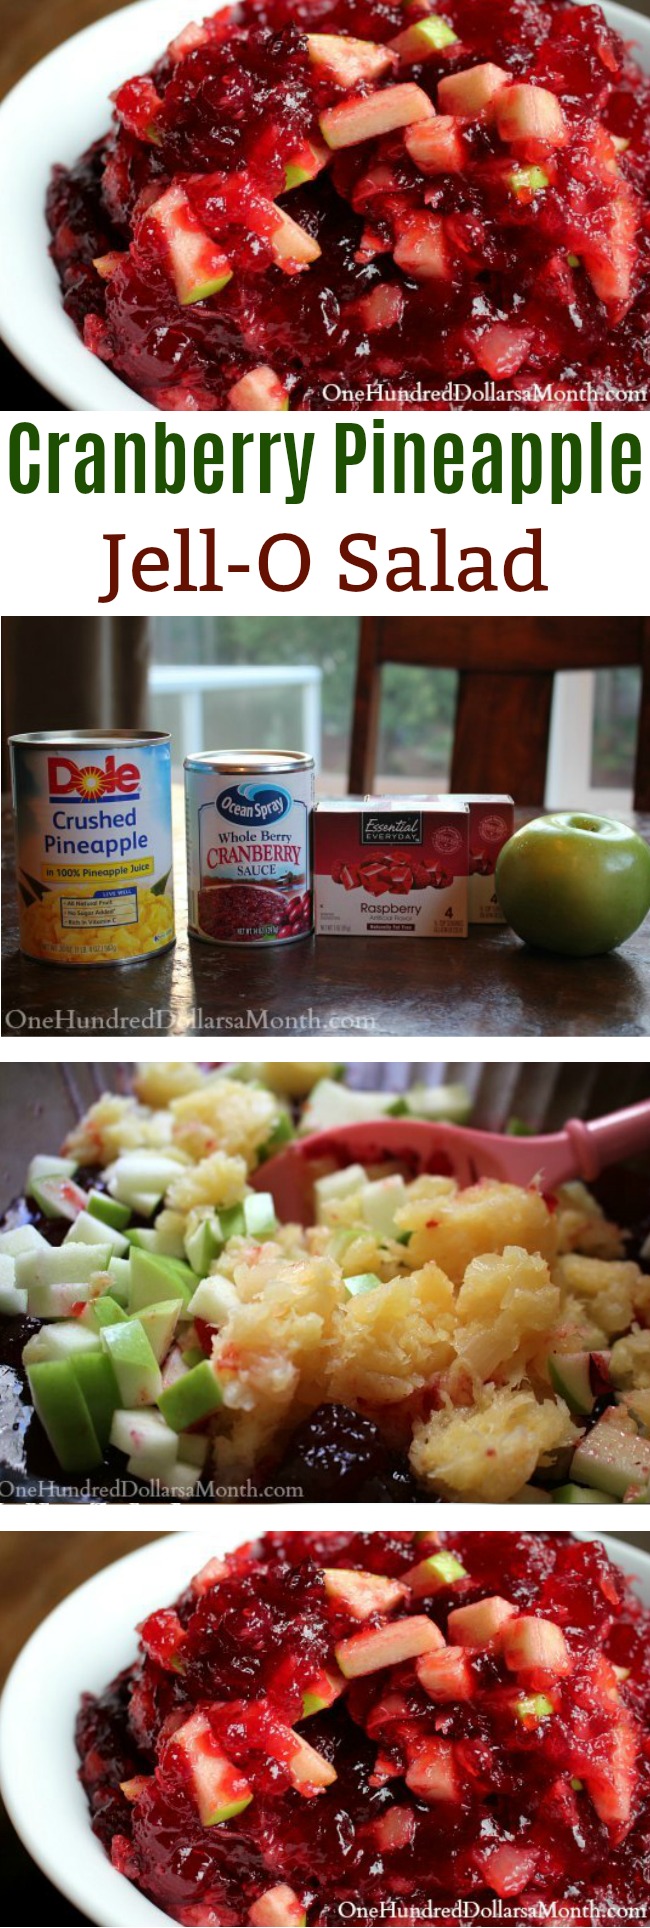 Cranberry Pineapple Jello Salad